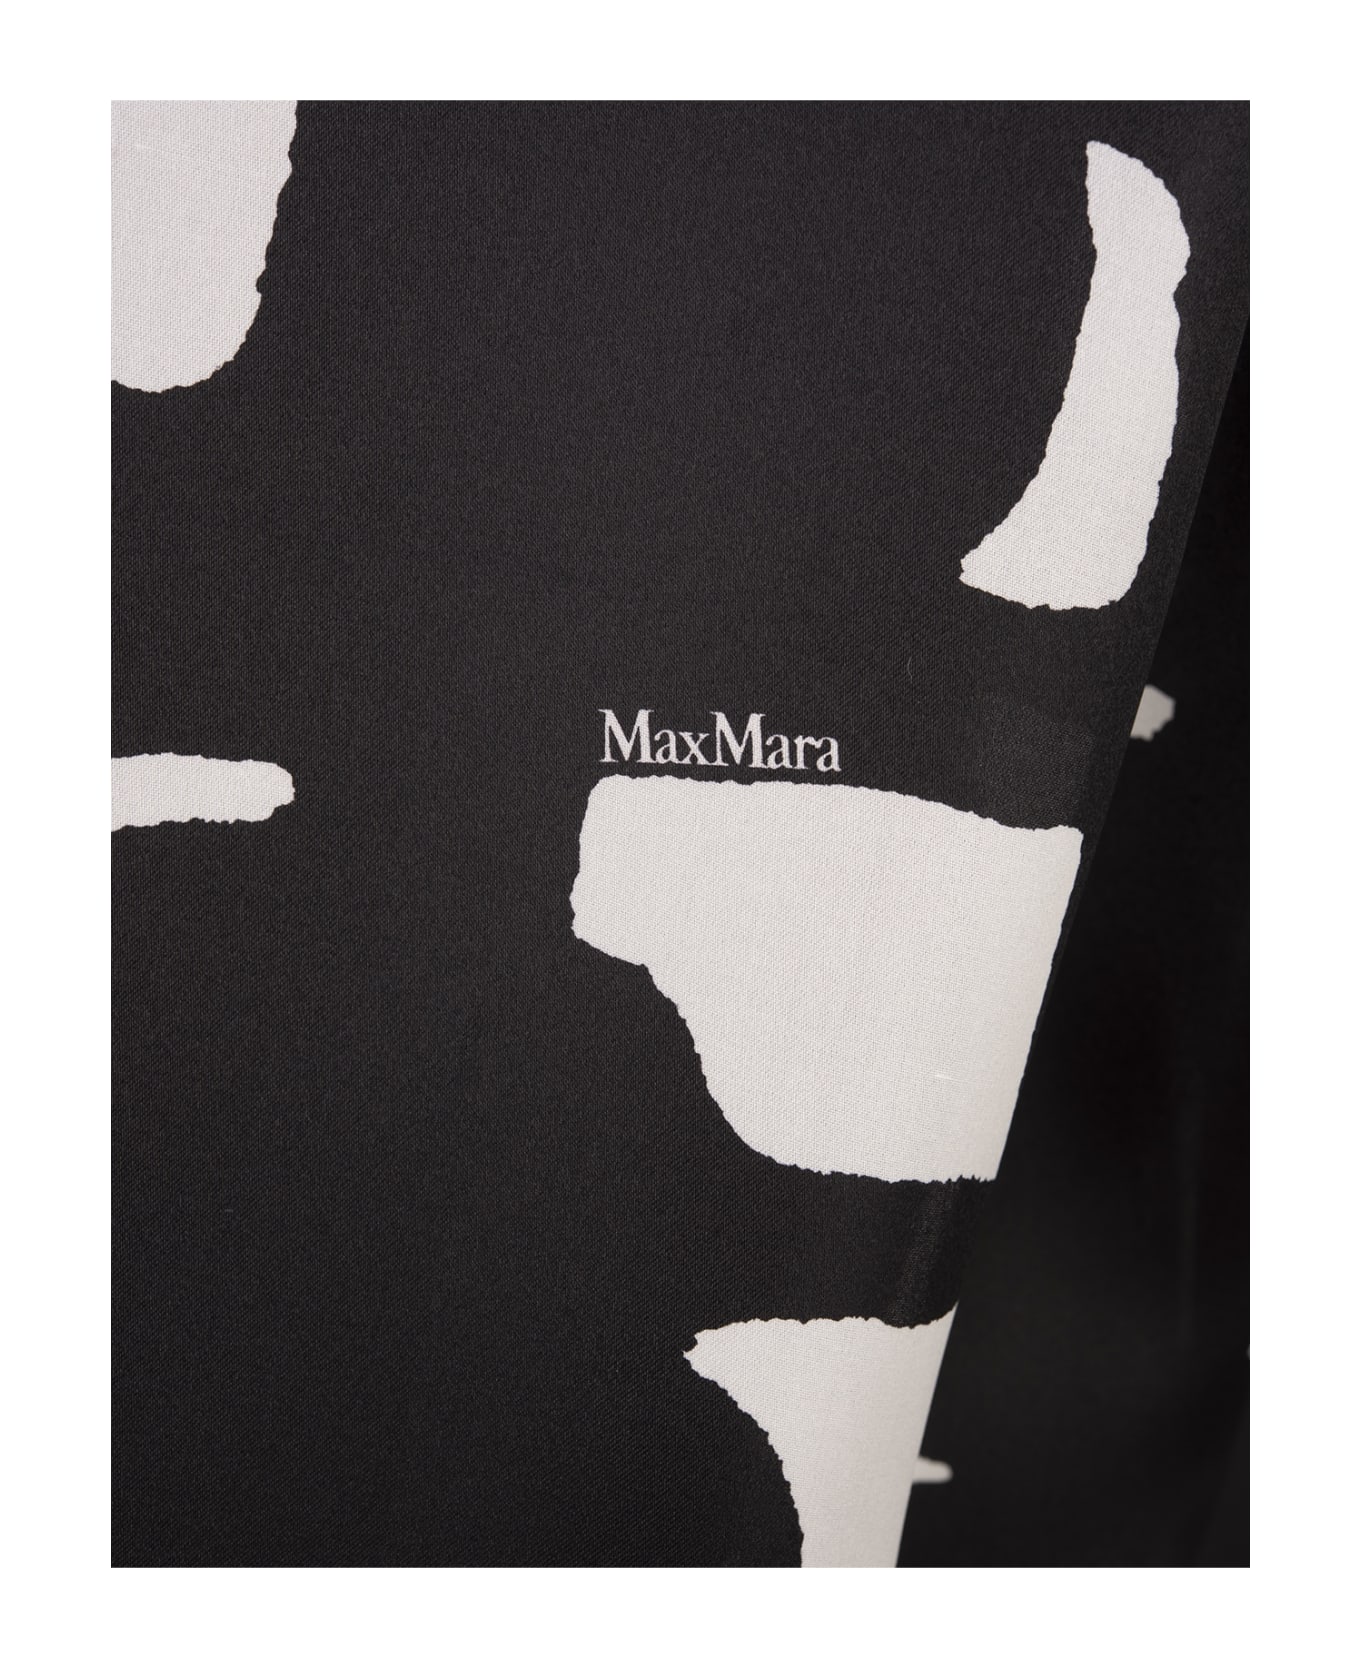 Max Mara Carella Shirt In White And Black - Fantasia